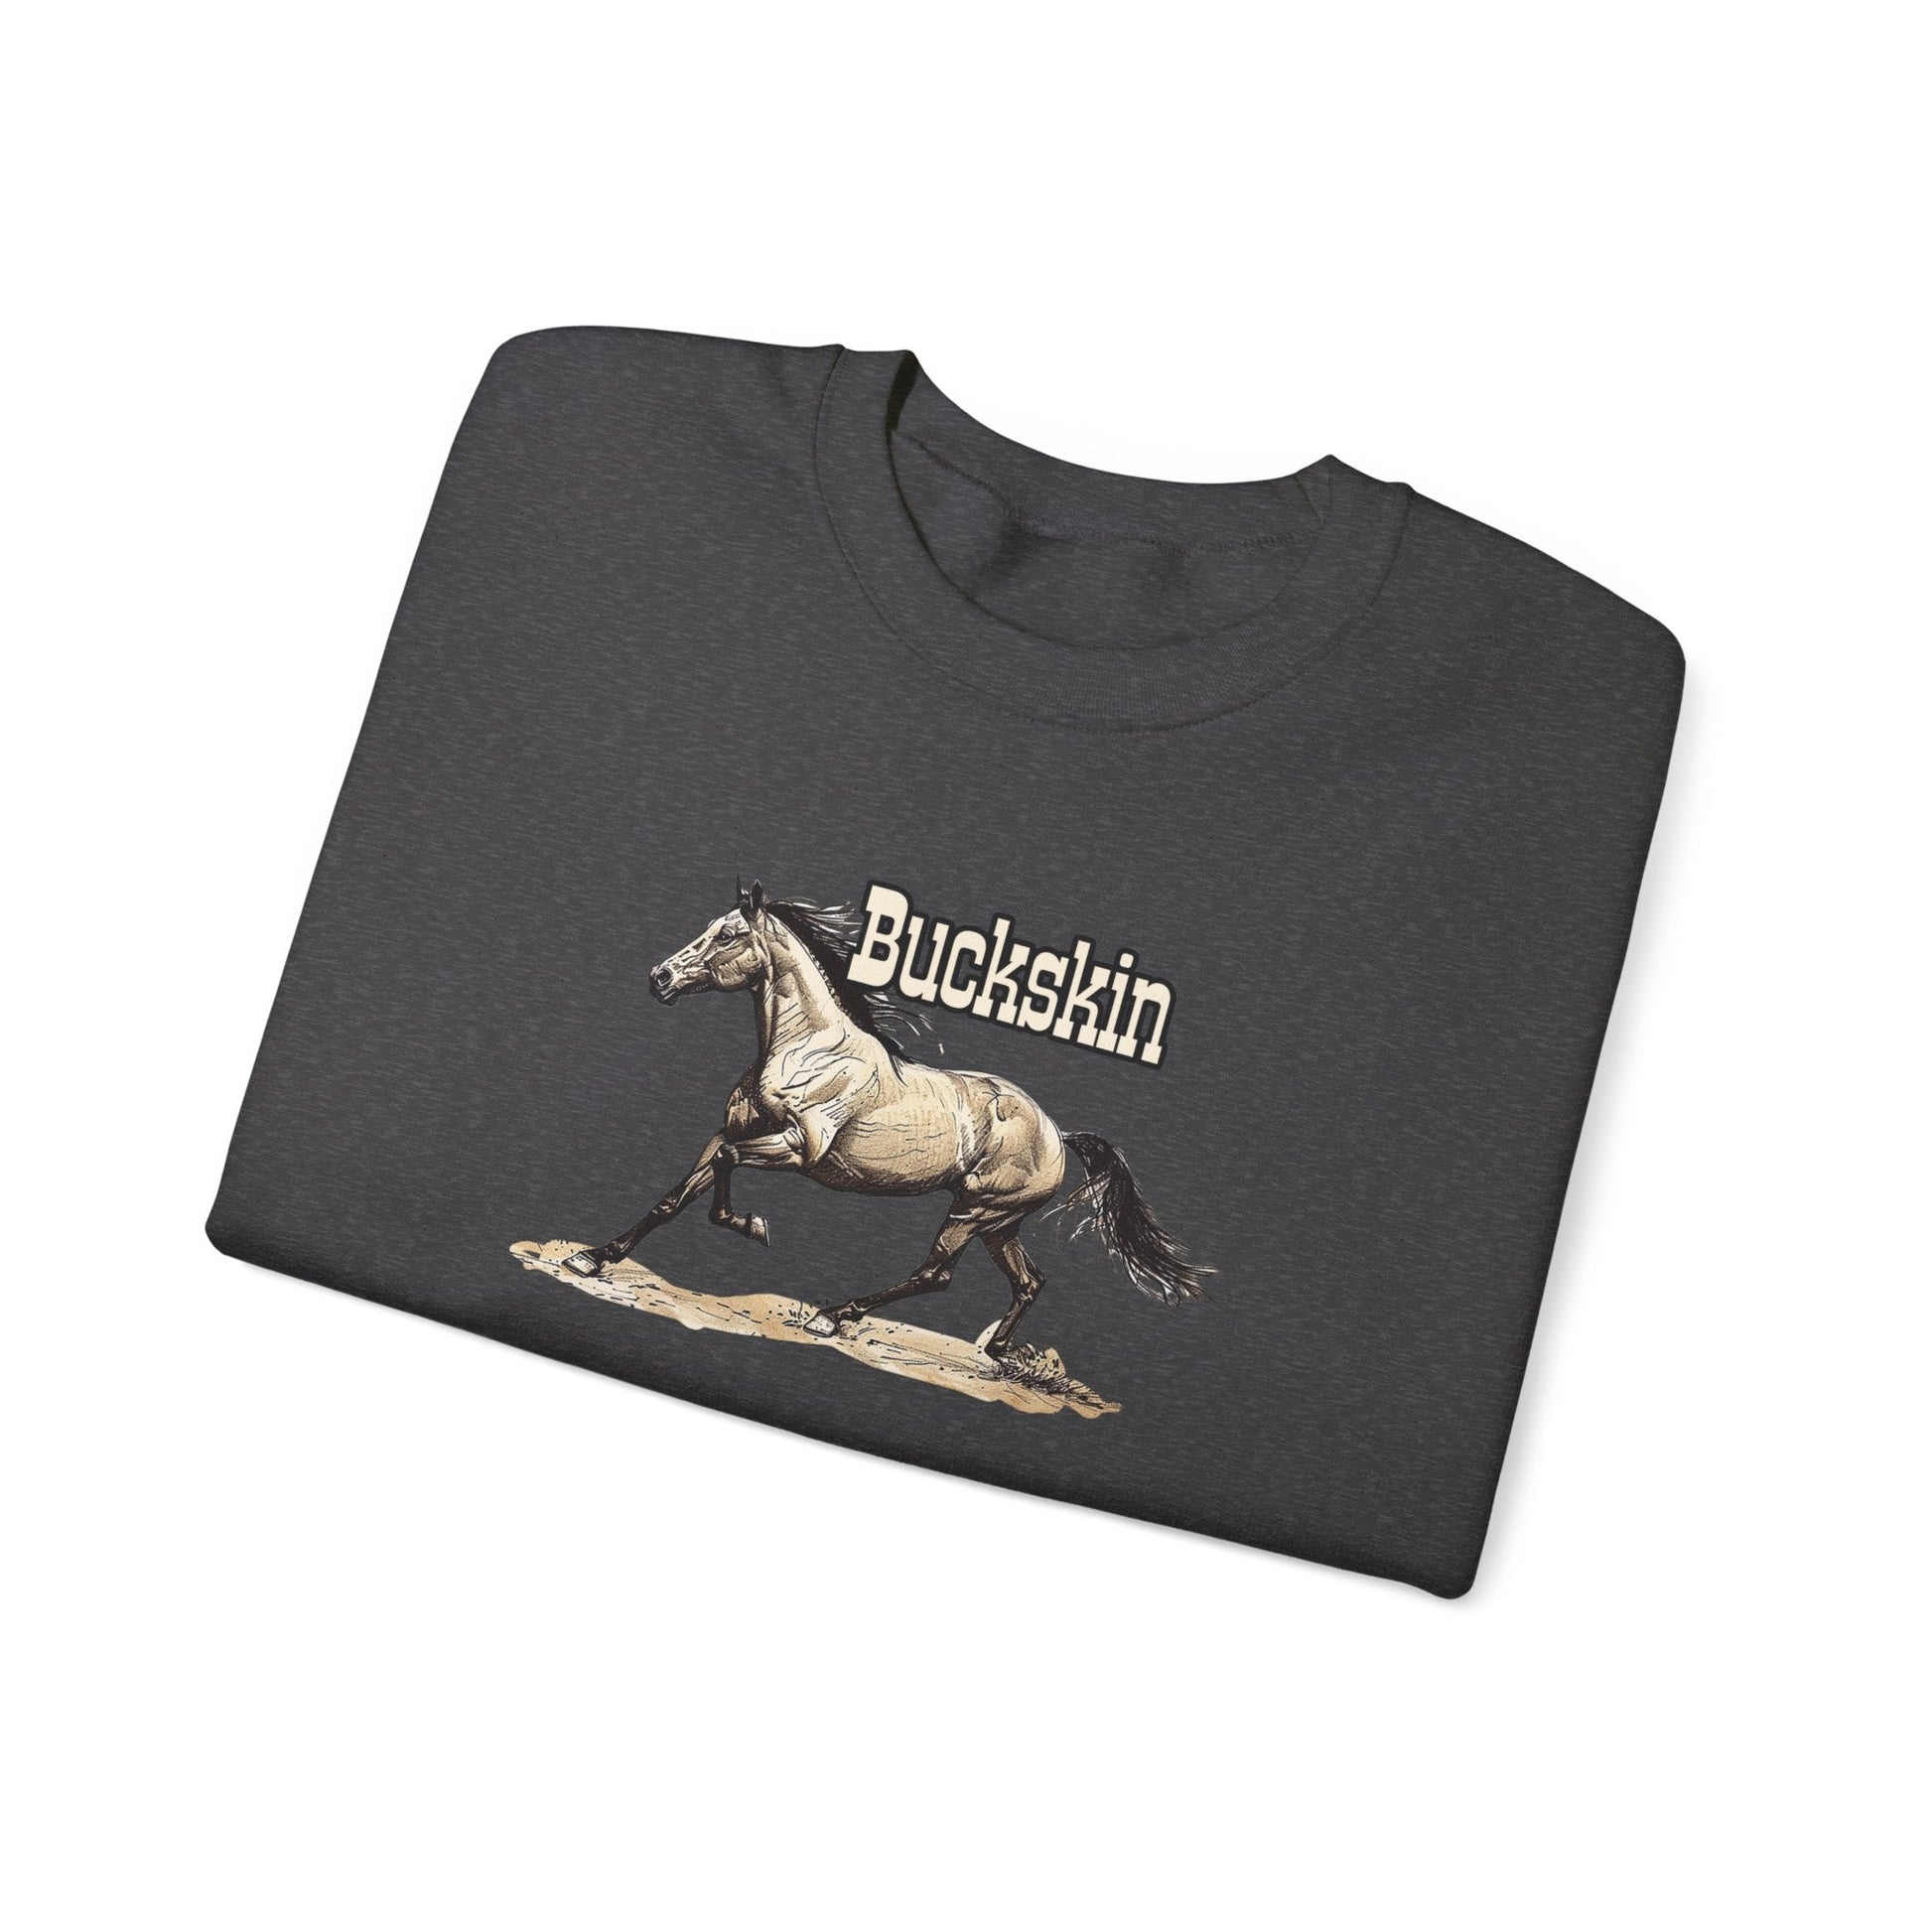 Buckskin Horse Sweatshirt ART, Buckskin Horse Lover Sweater - FlooredByArt